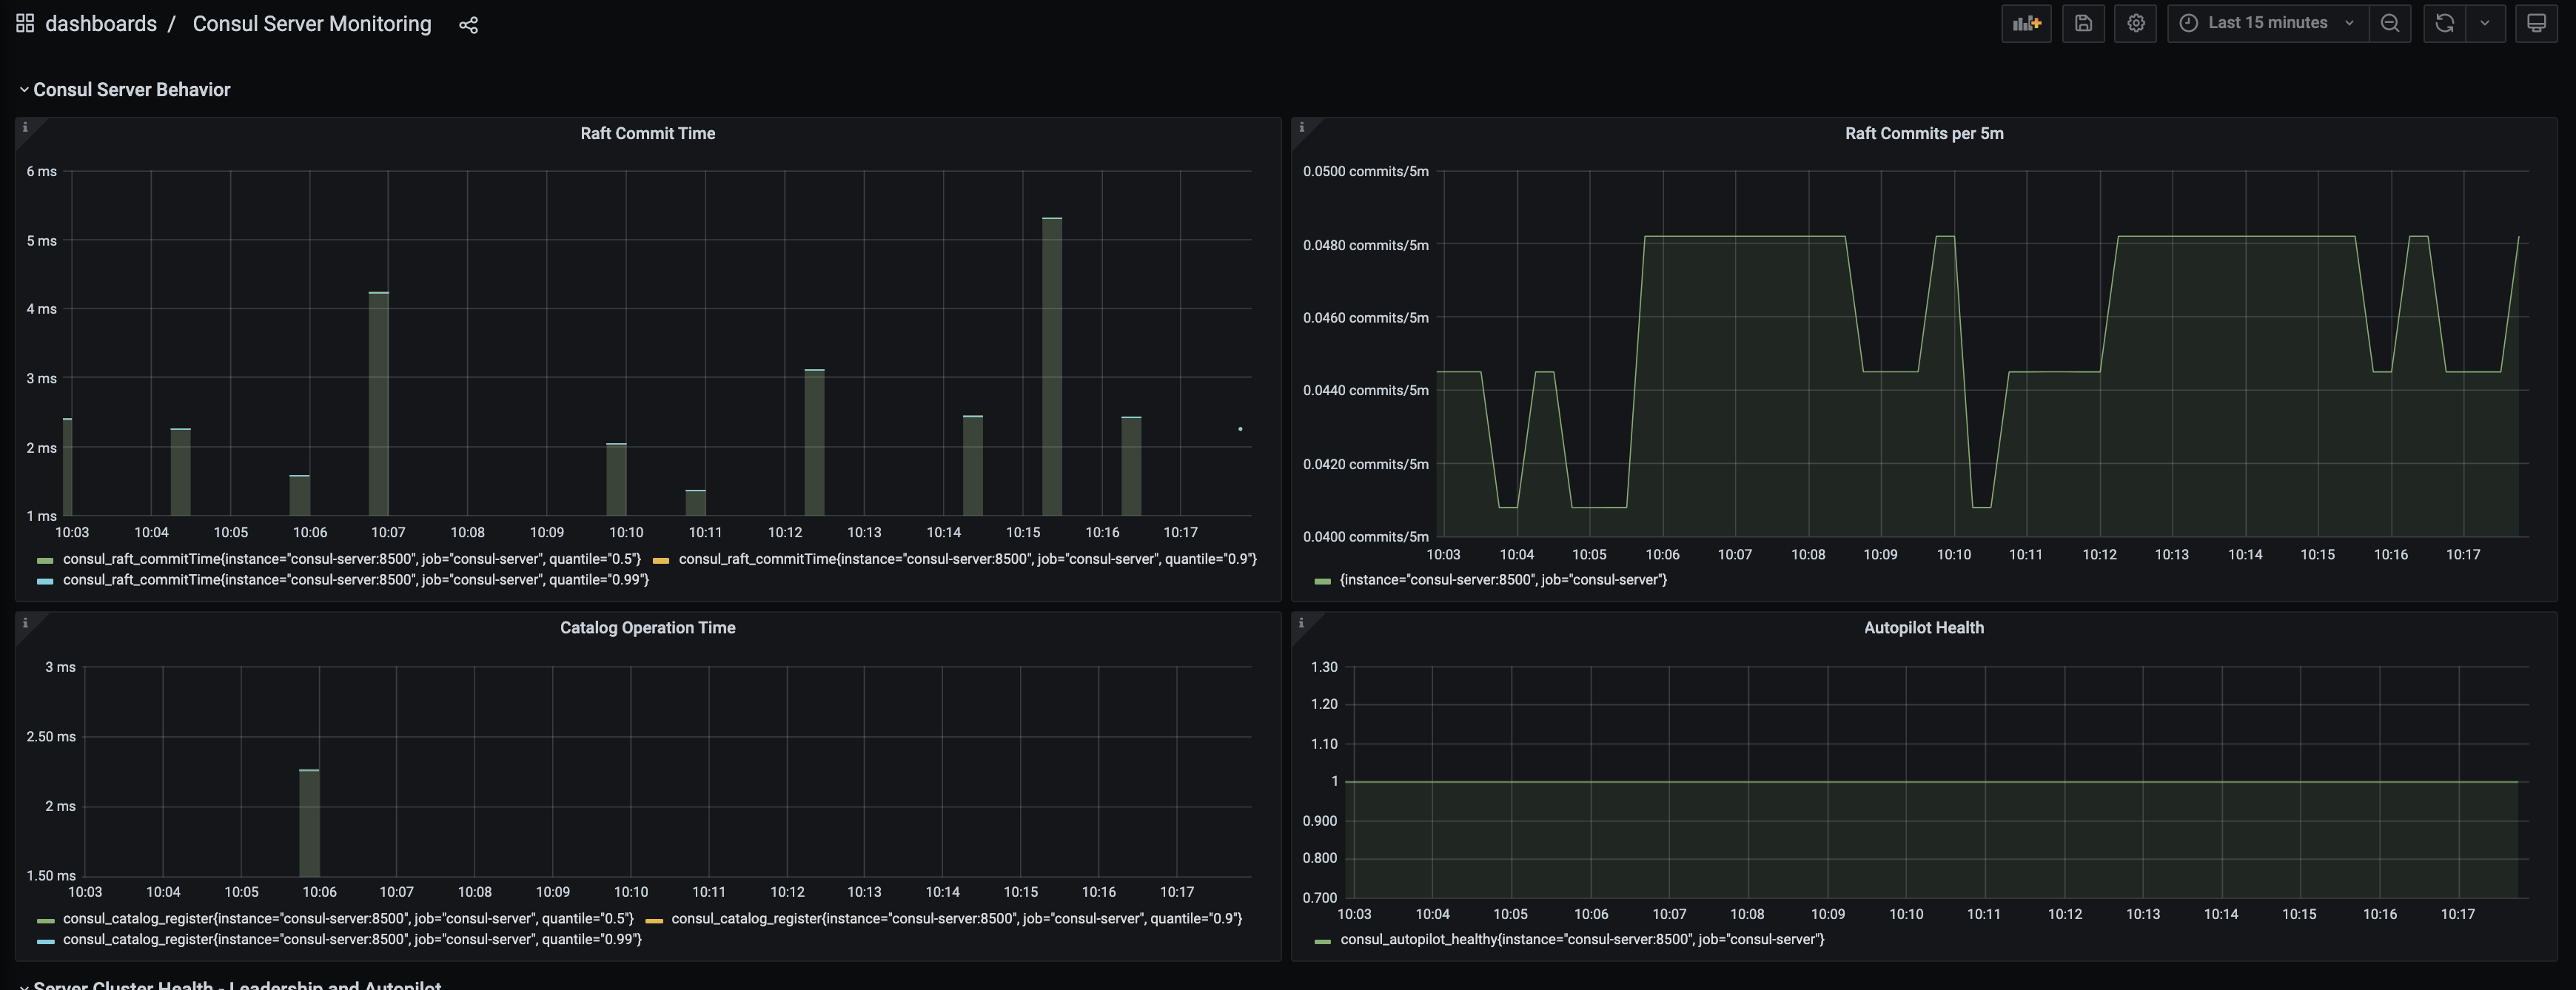 Image of Consul Server Monitoring metrics dashboard in Grafana UI.